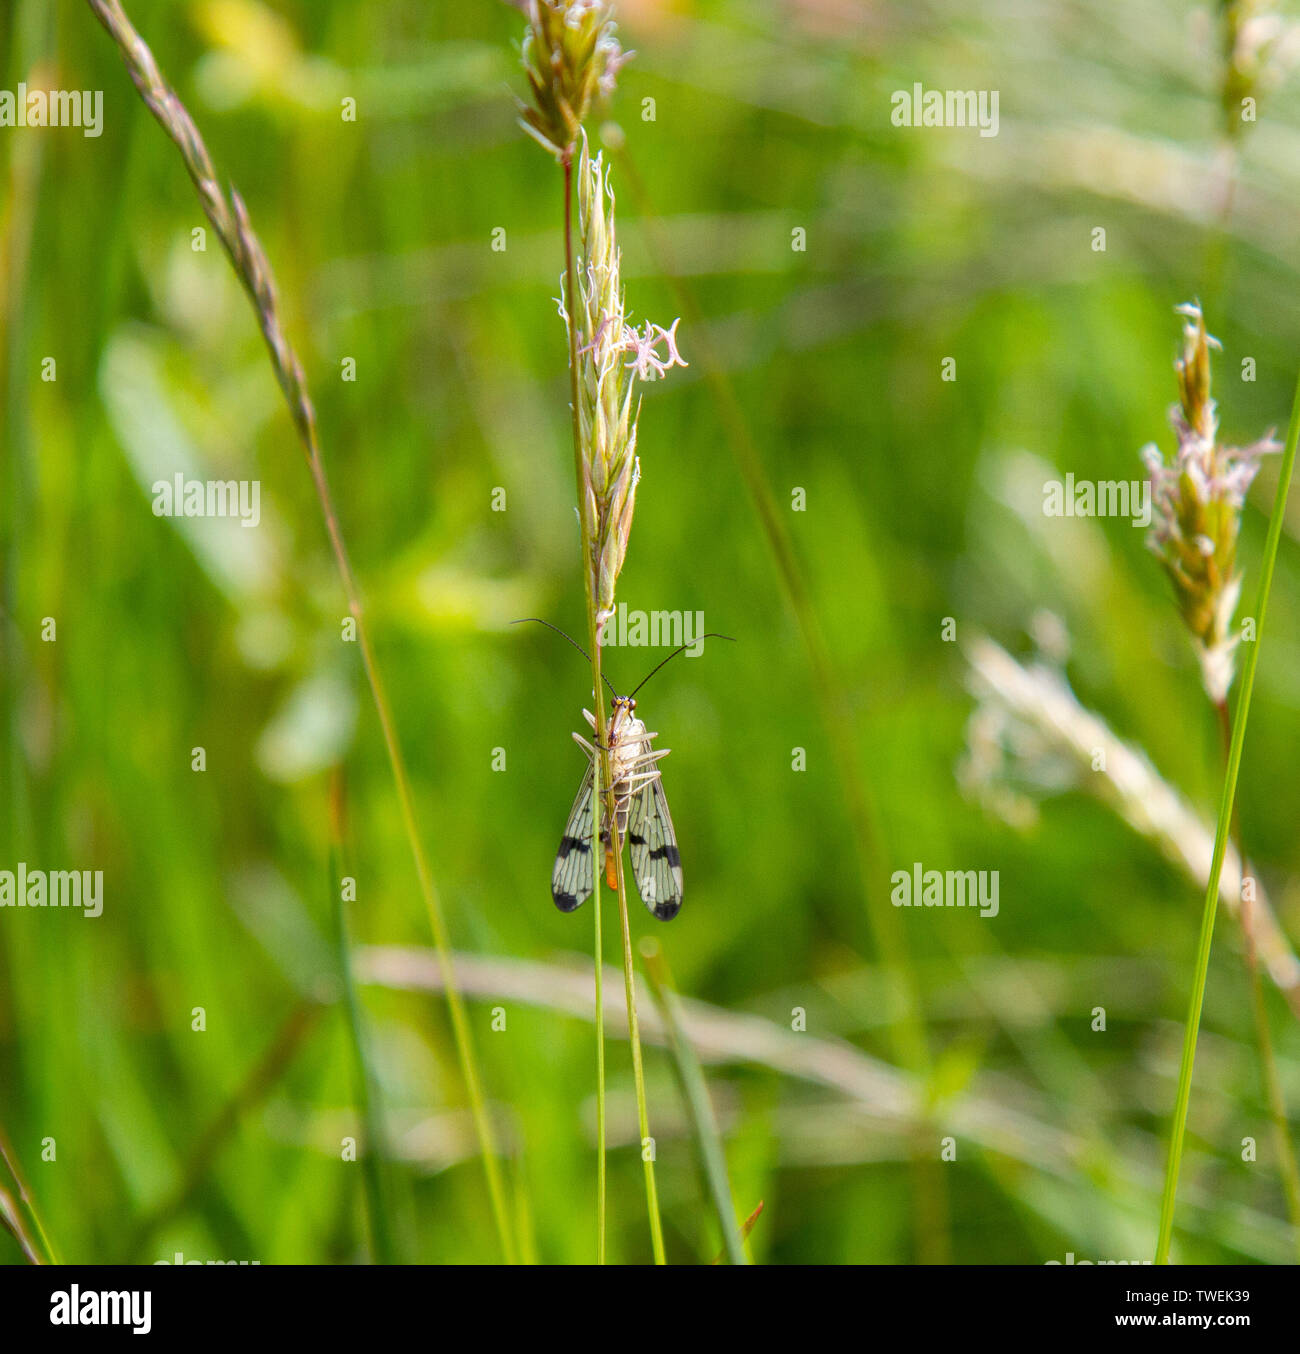 Scorpion fly on grass stalk Stock Photo